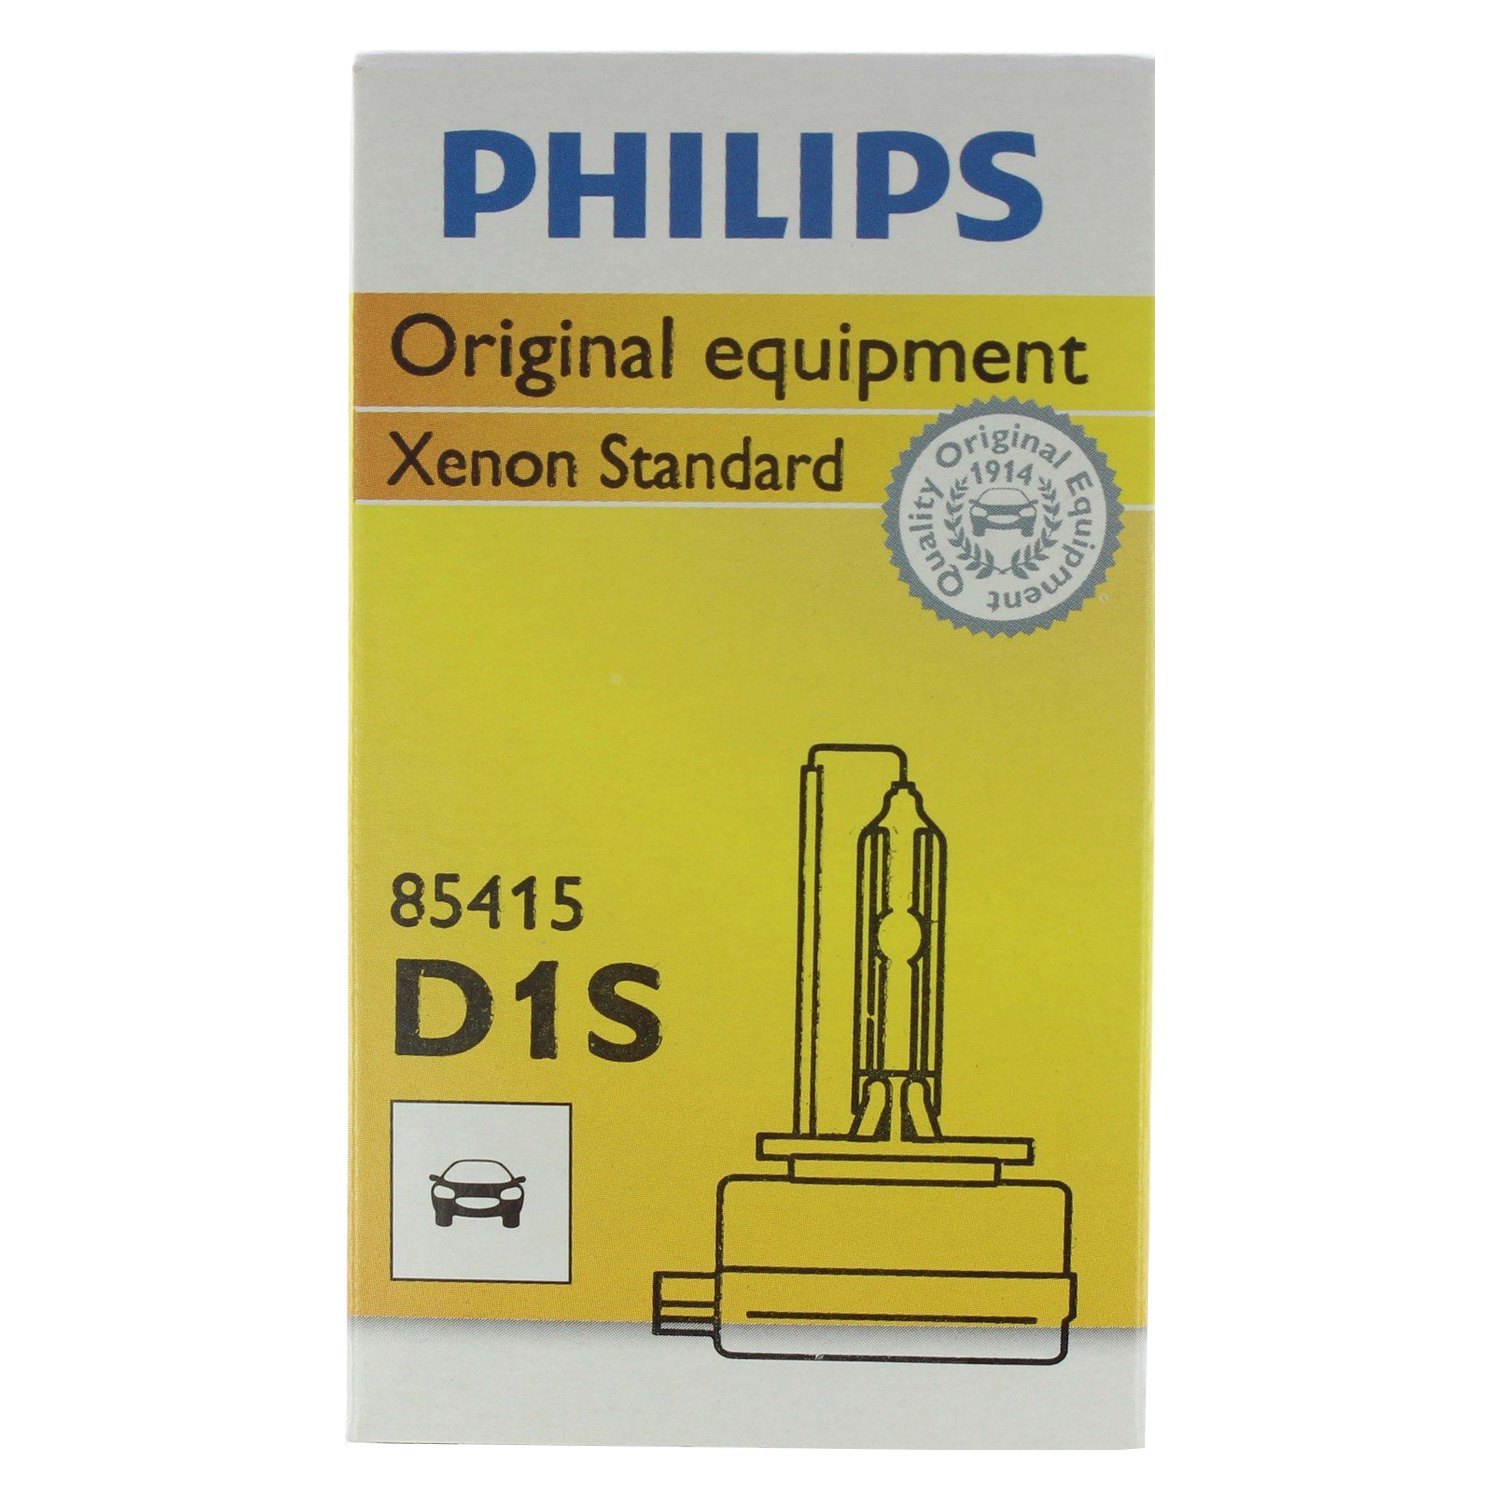 Филипс оригинал. Philips d3s 42302 Original. Philips 42302 лампа d3s. Ксенон стандарт d2r Филипс. Ксеноновая автомобильная лампа d4r 42406 Philips Xenon Standart.